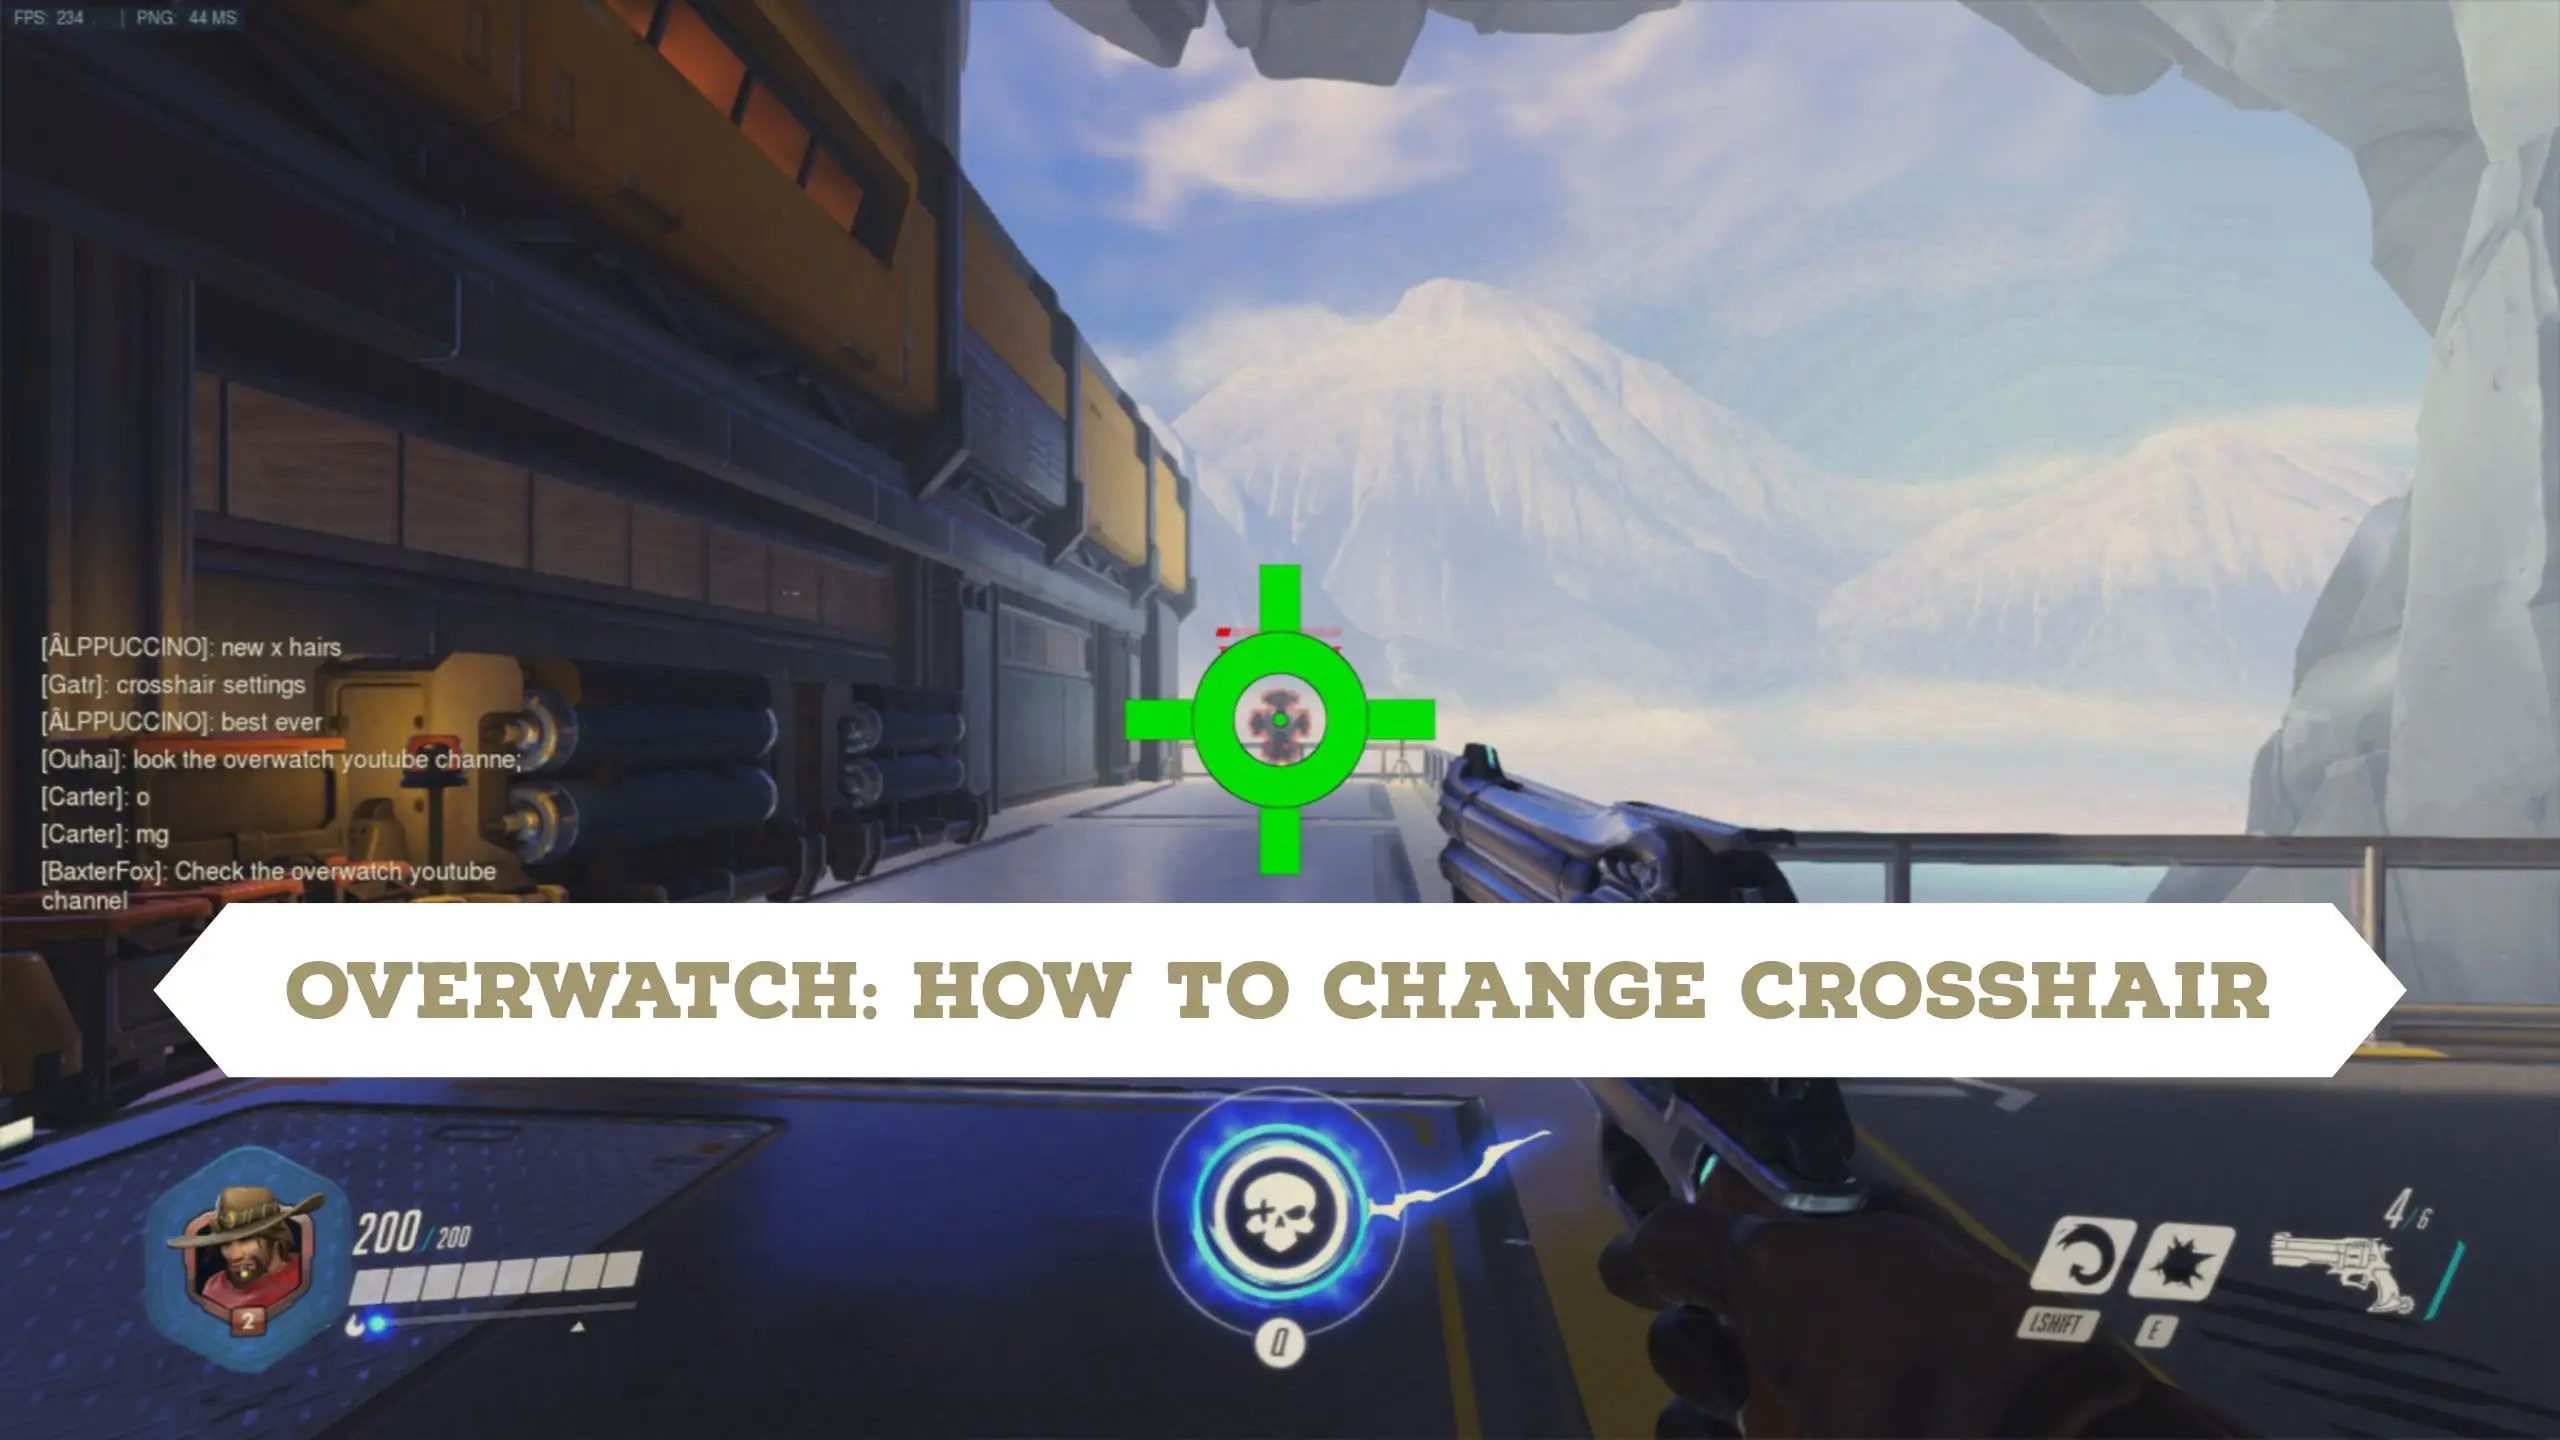 Quick Method] How to Easily Change Crosshair in Overwatch